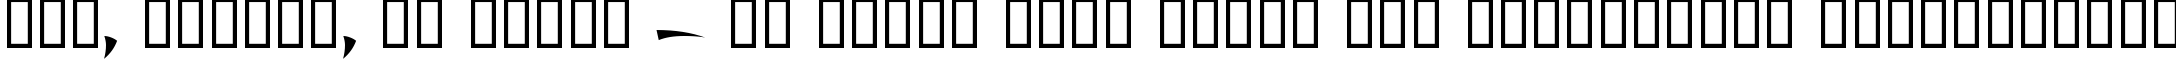 Пример написания шрифтом Wonton by Da Font Mafia текста на украинском